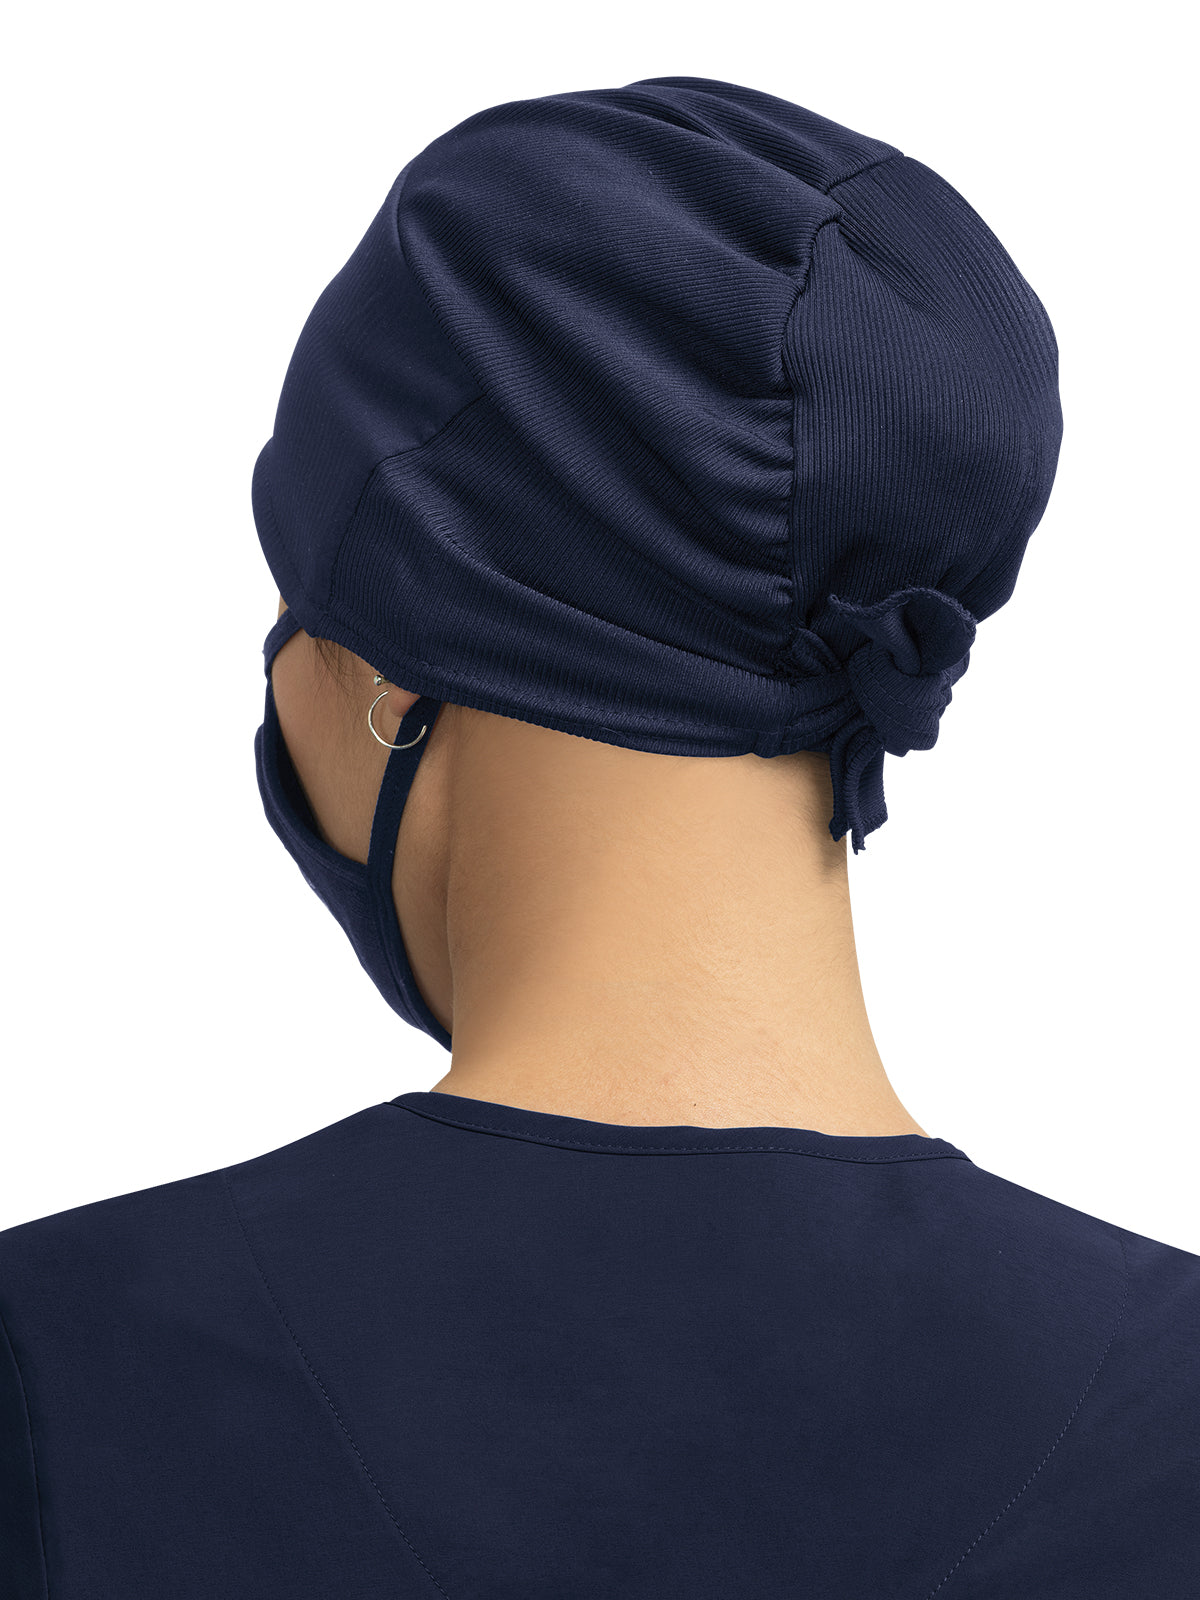 Unisex Surgical Hat